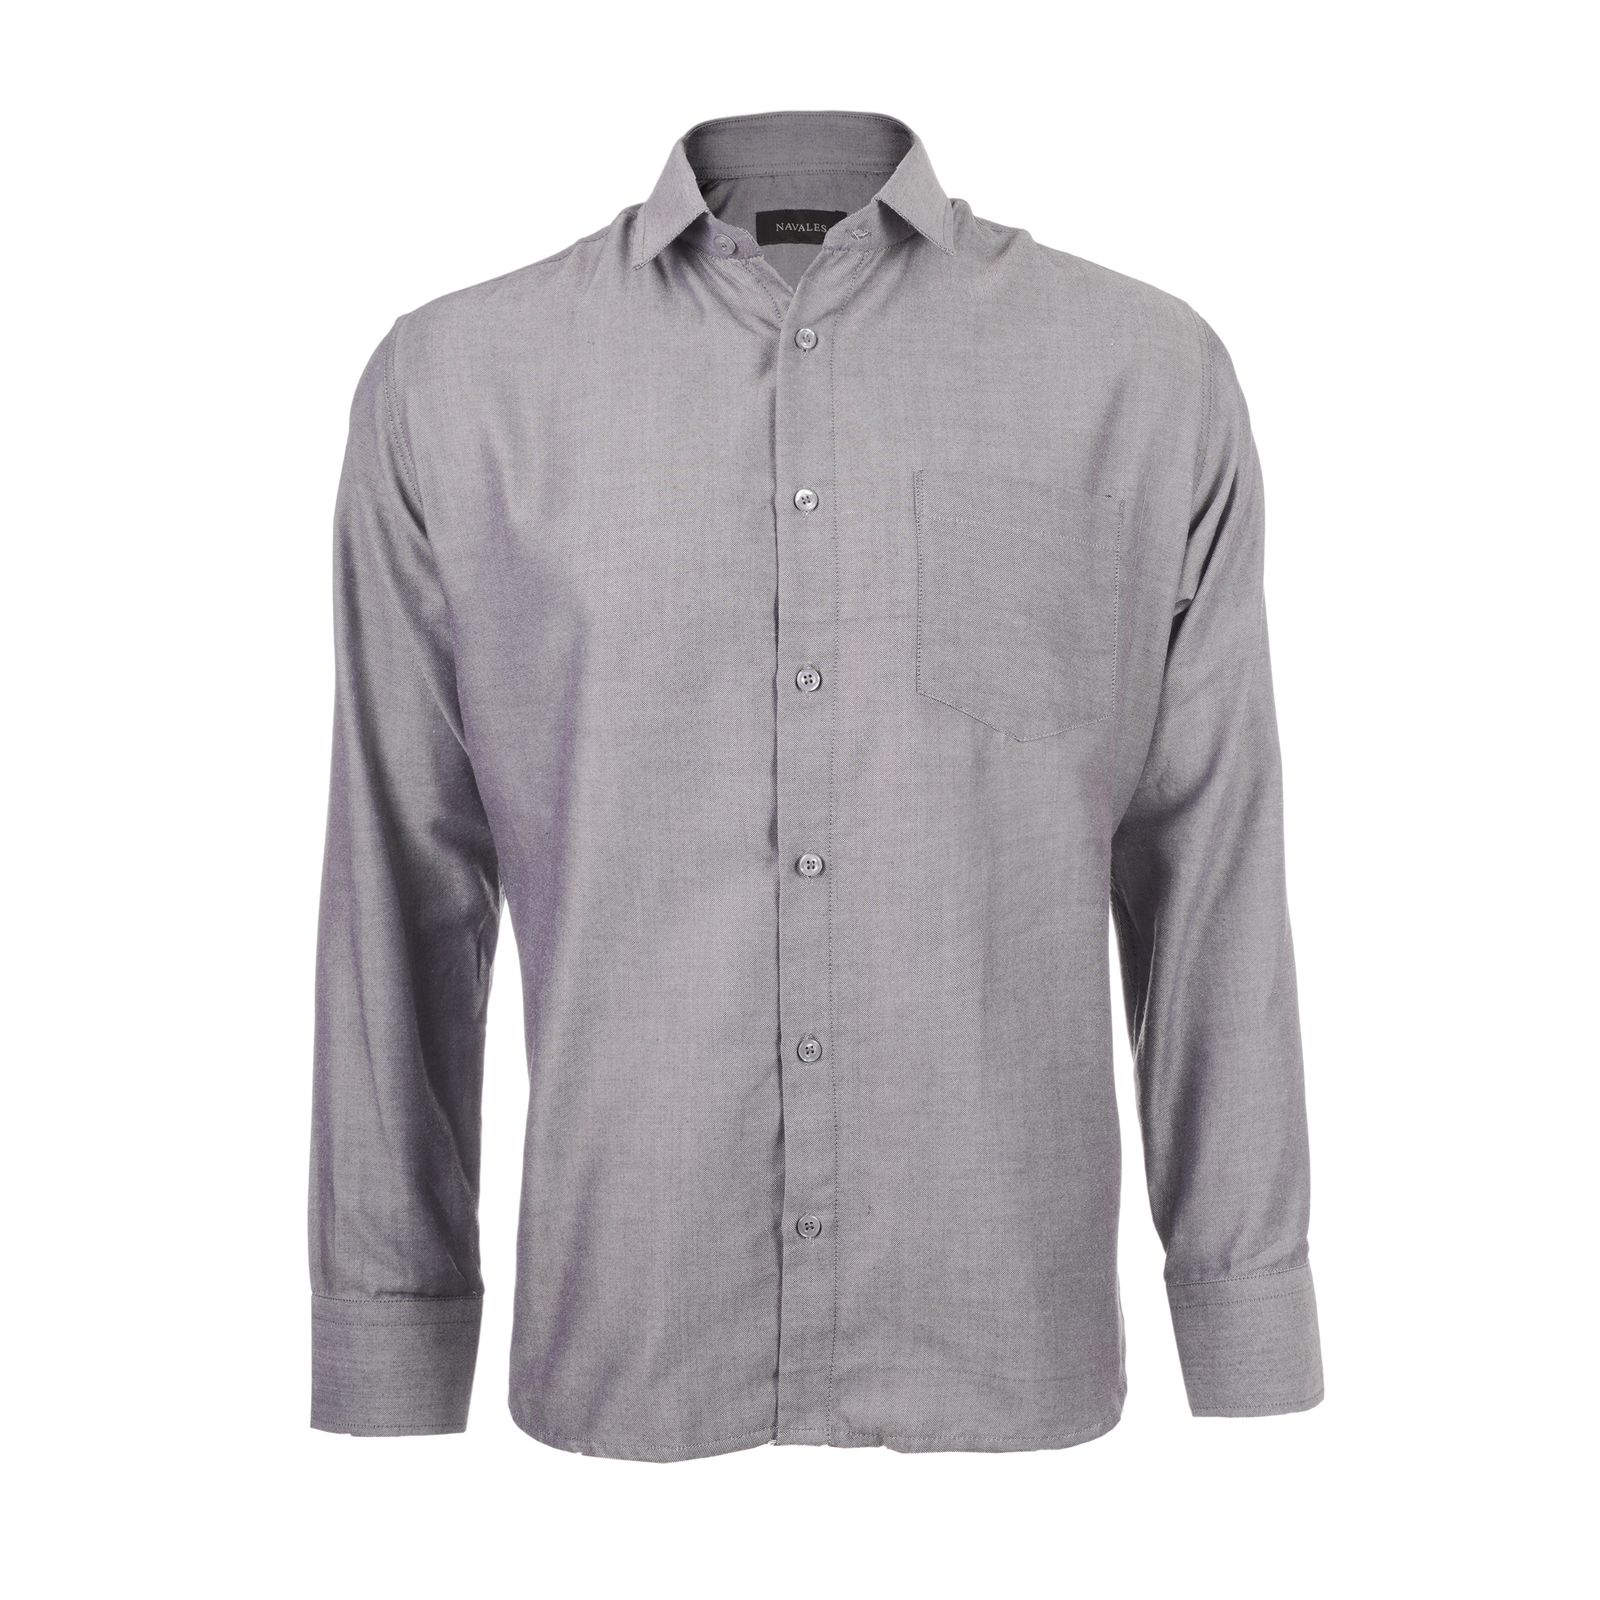 پیراهن آستین بلند مردانه ناوالس مدل Pk3-8020-GY -  - 2